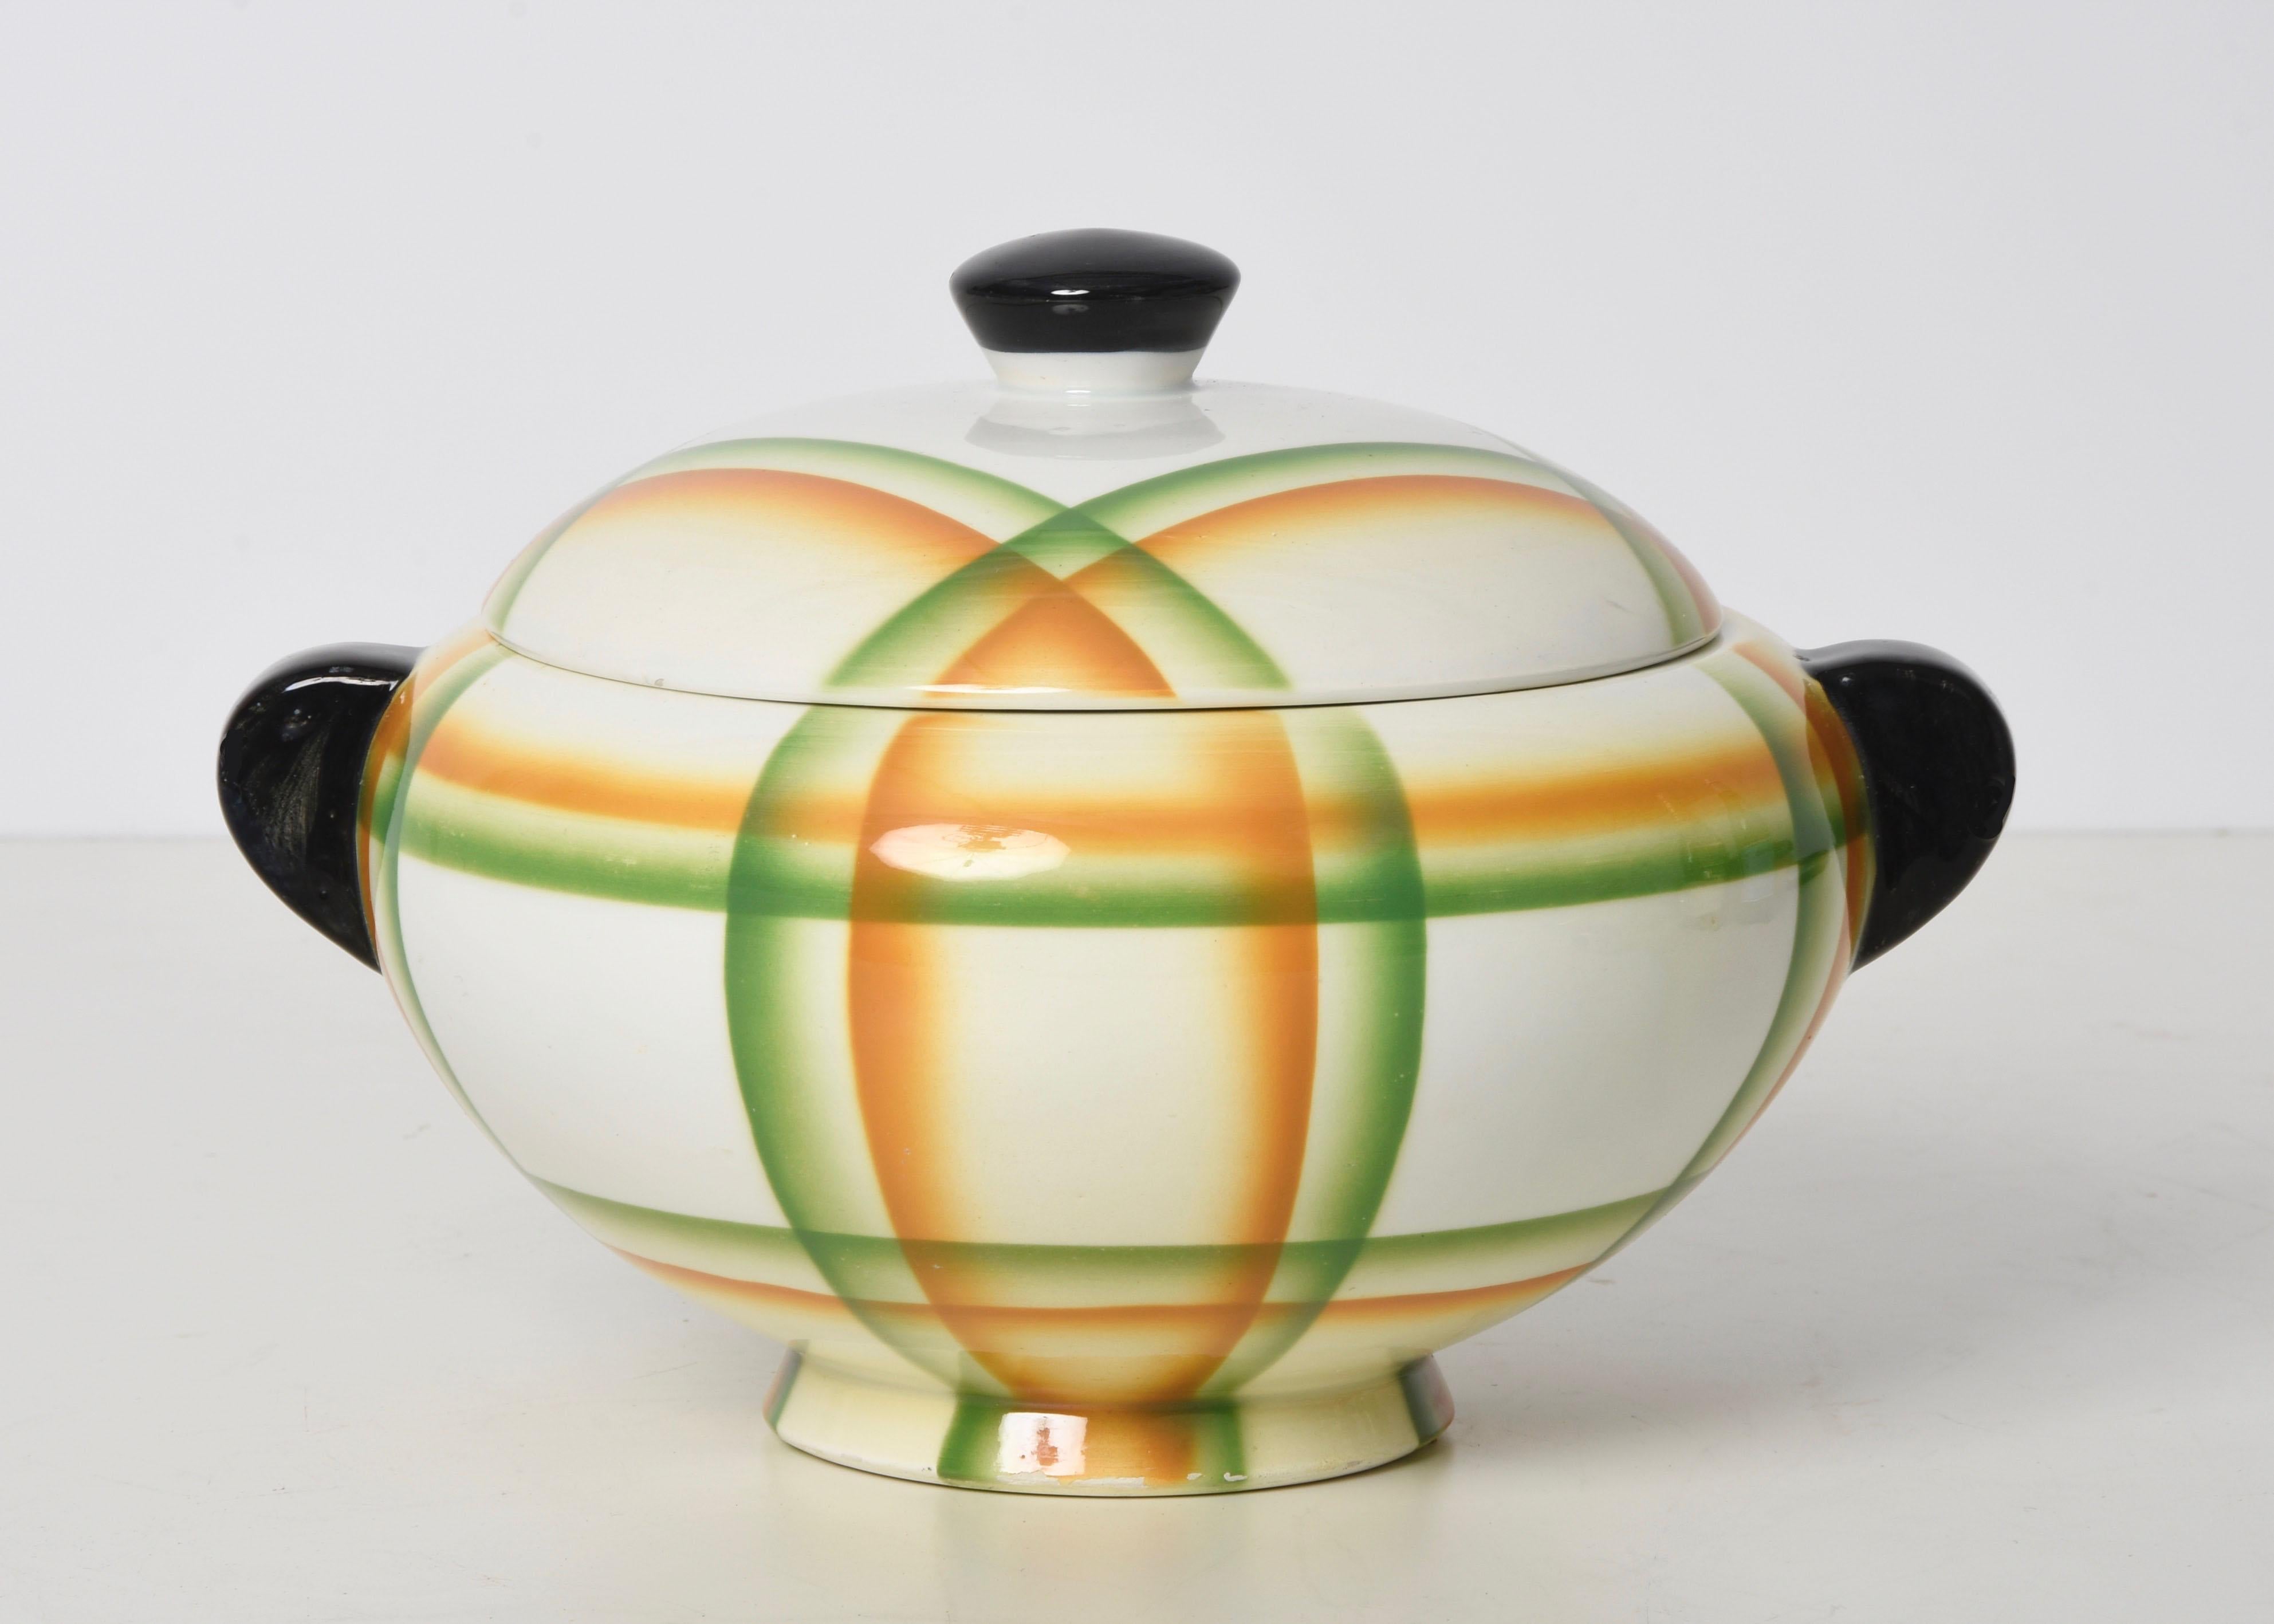 Simonetto Futuristic Airbrushed Ceramic Italian Centerpiece Soup Bowl, 1930s For Sale 3